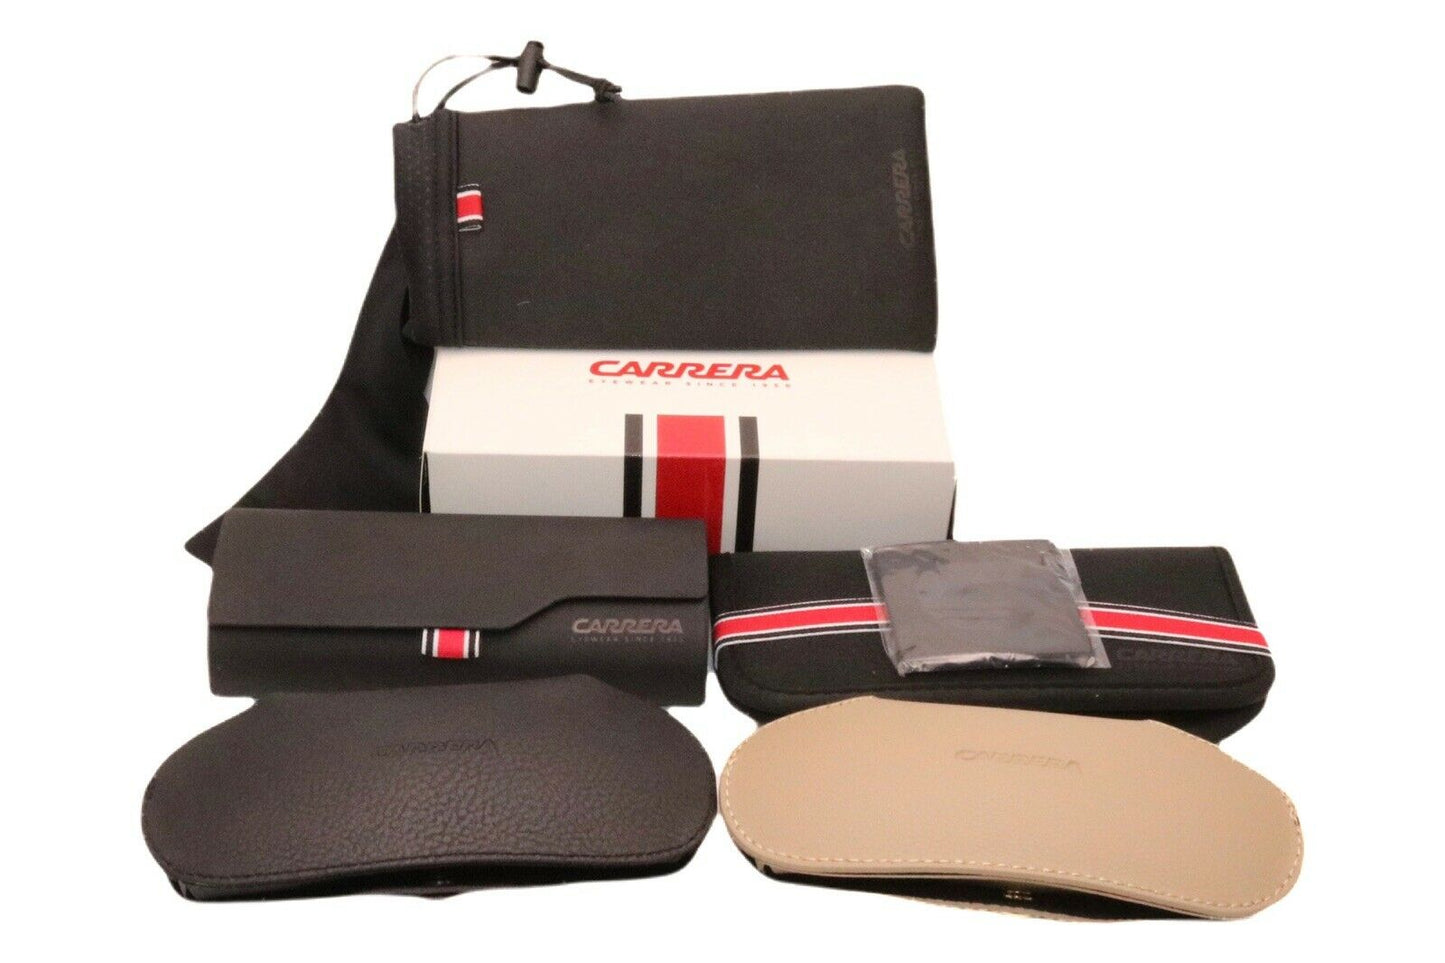 Carrera 1027/S-0EKP 9K 59mm New Sunglasses